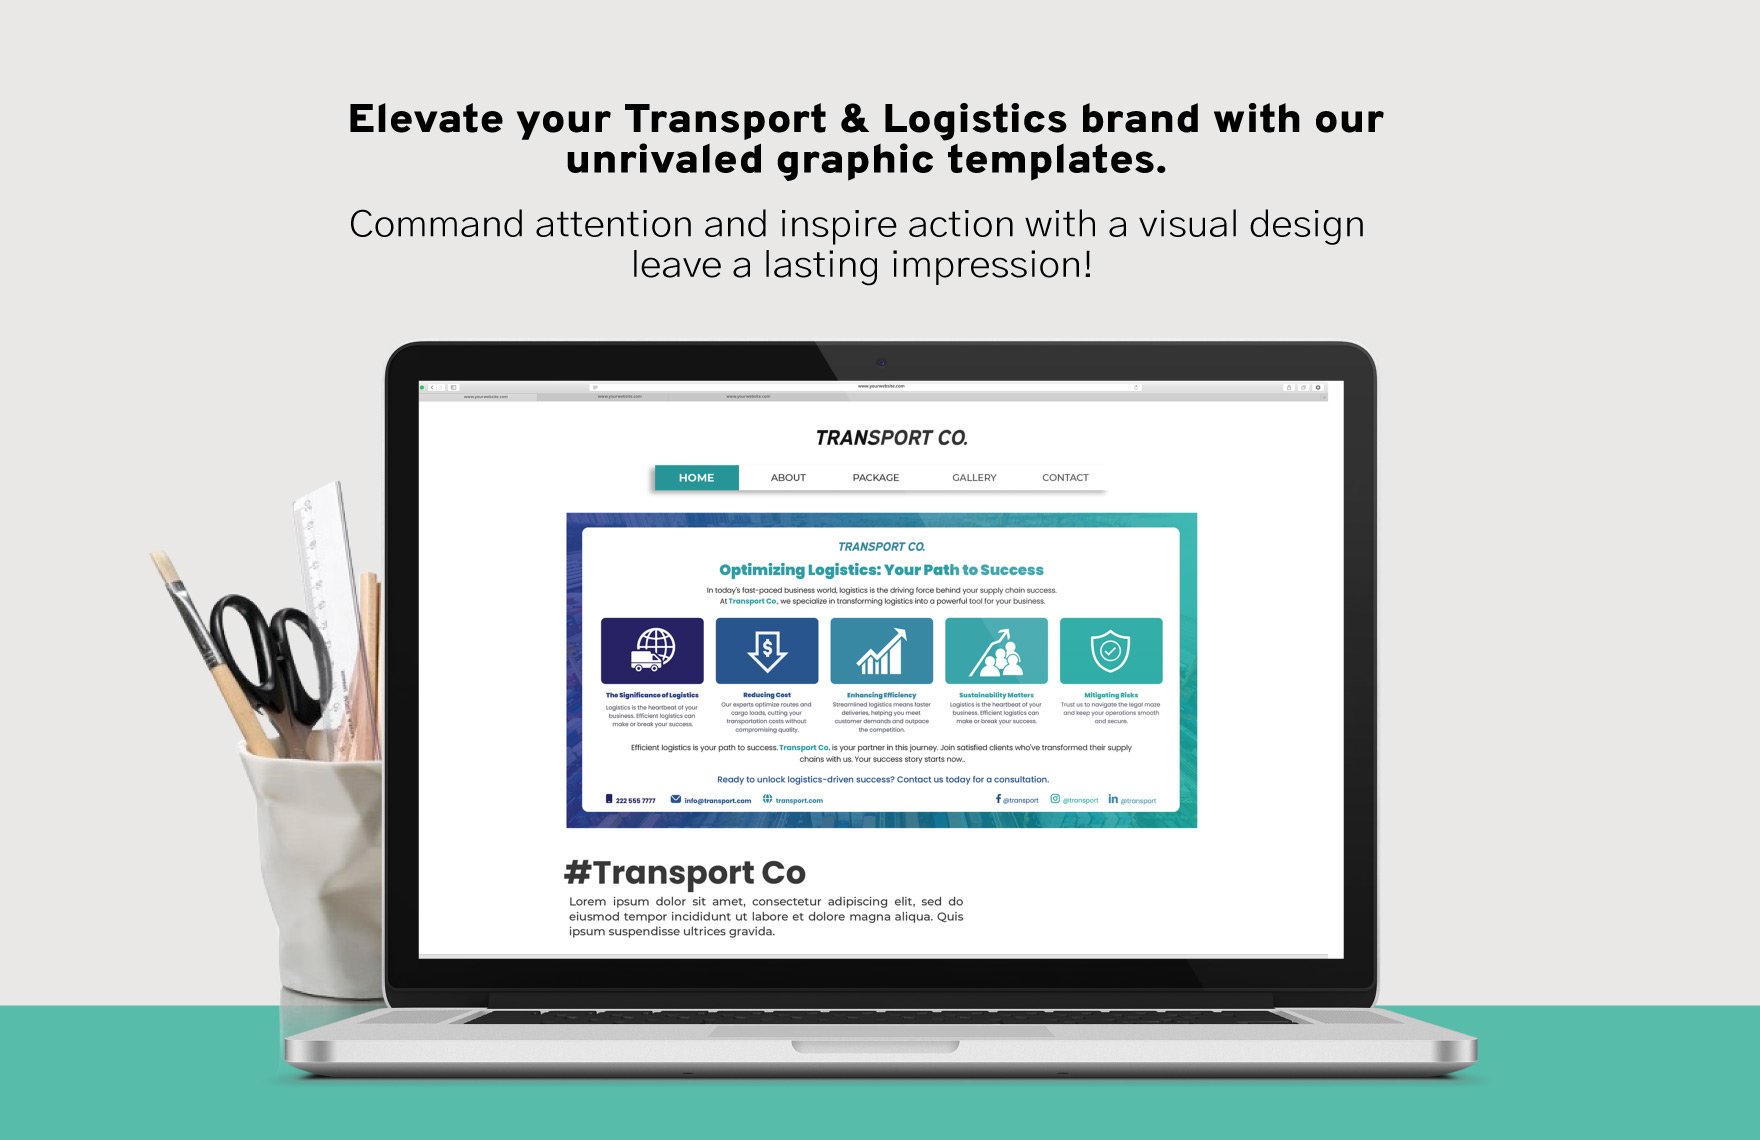 Transport and Logistics Marketing Blog Post Template